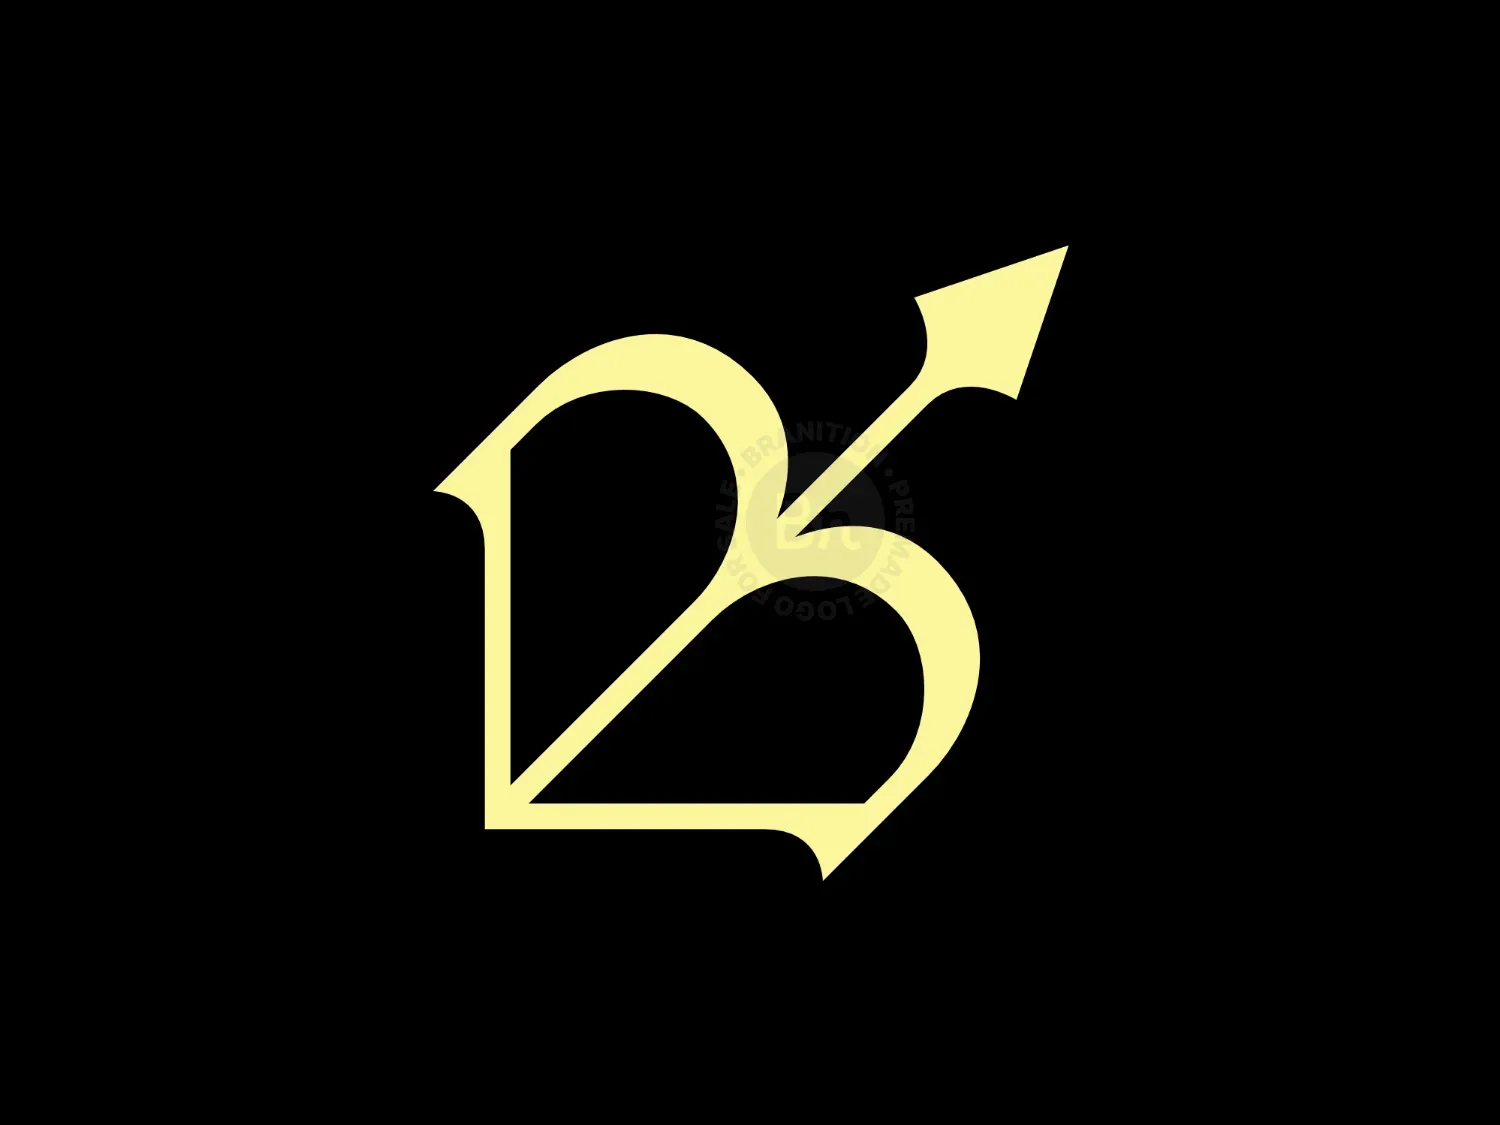 Letter B Arrow Logo